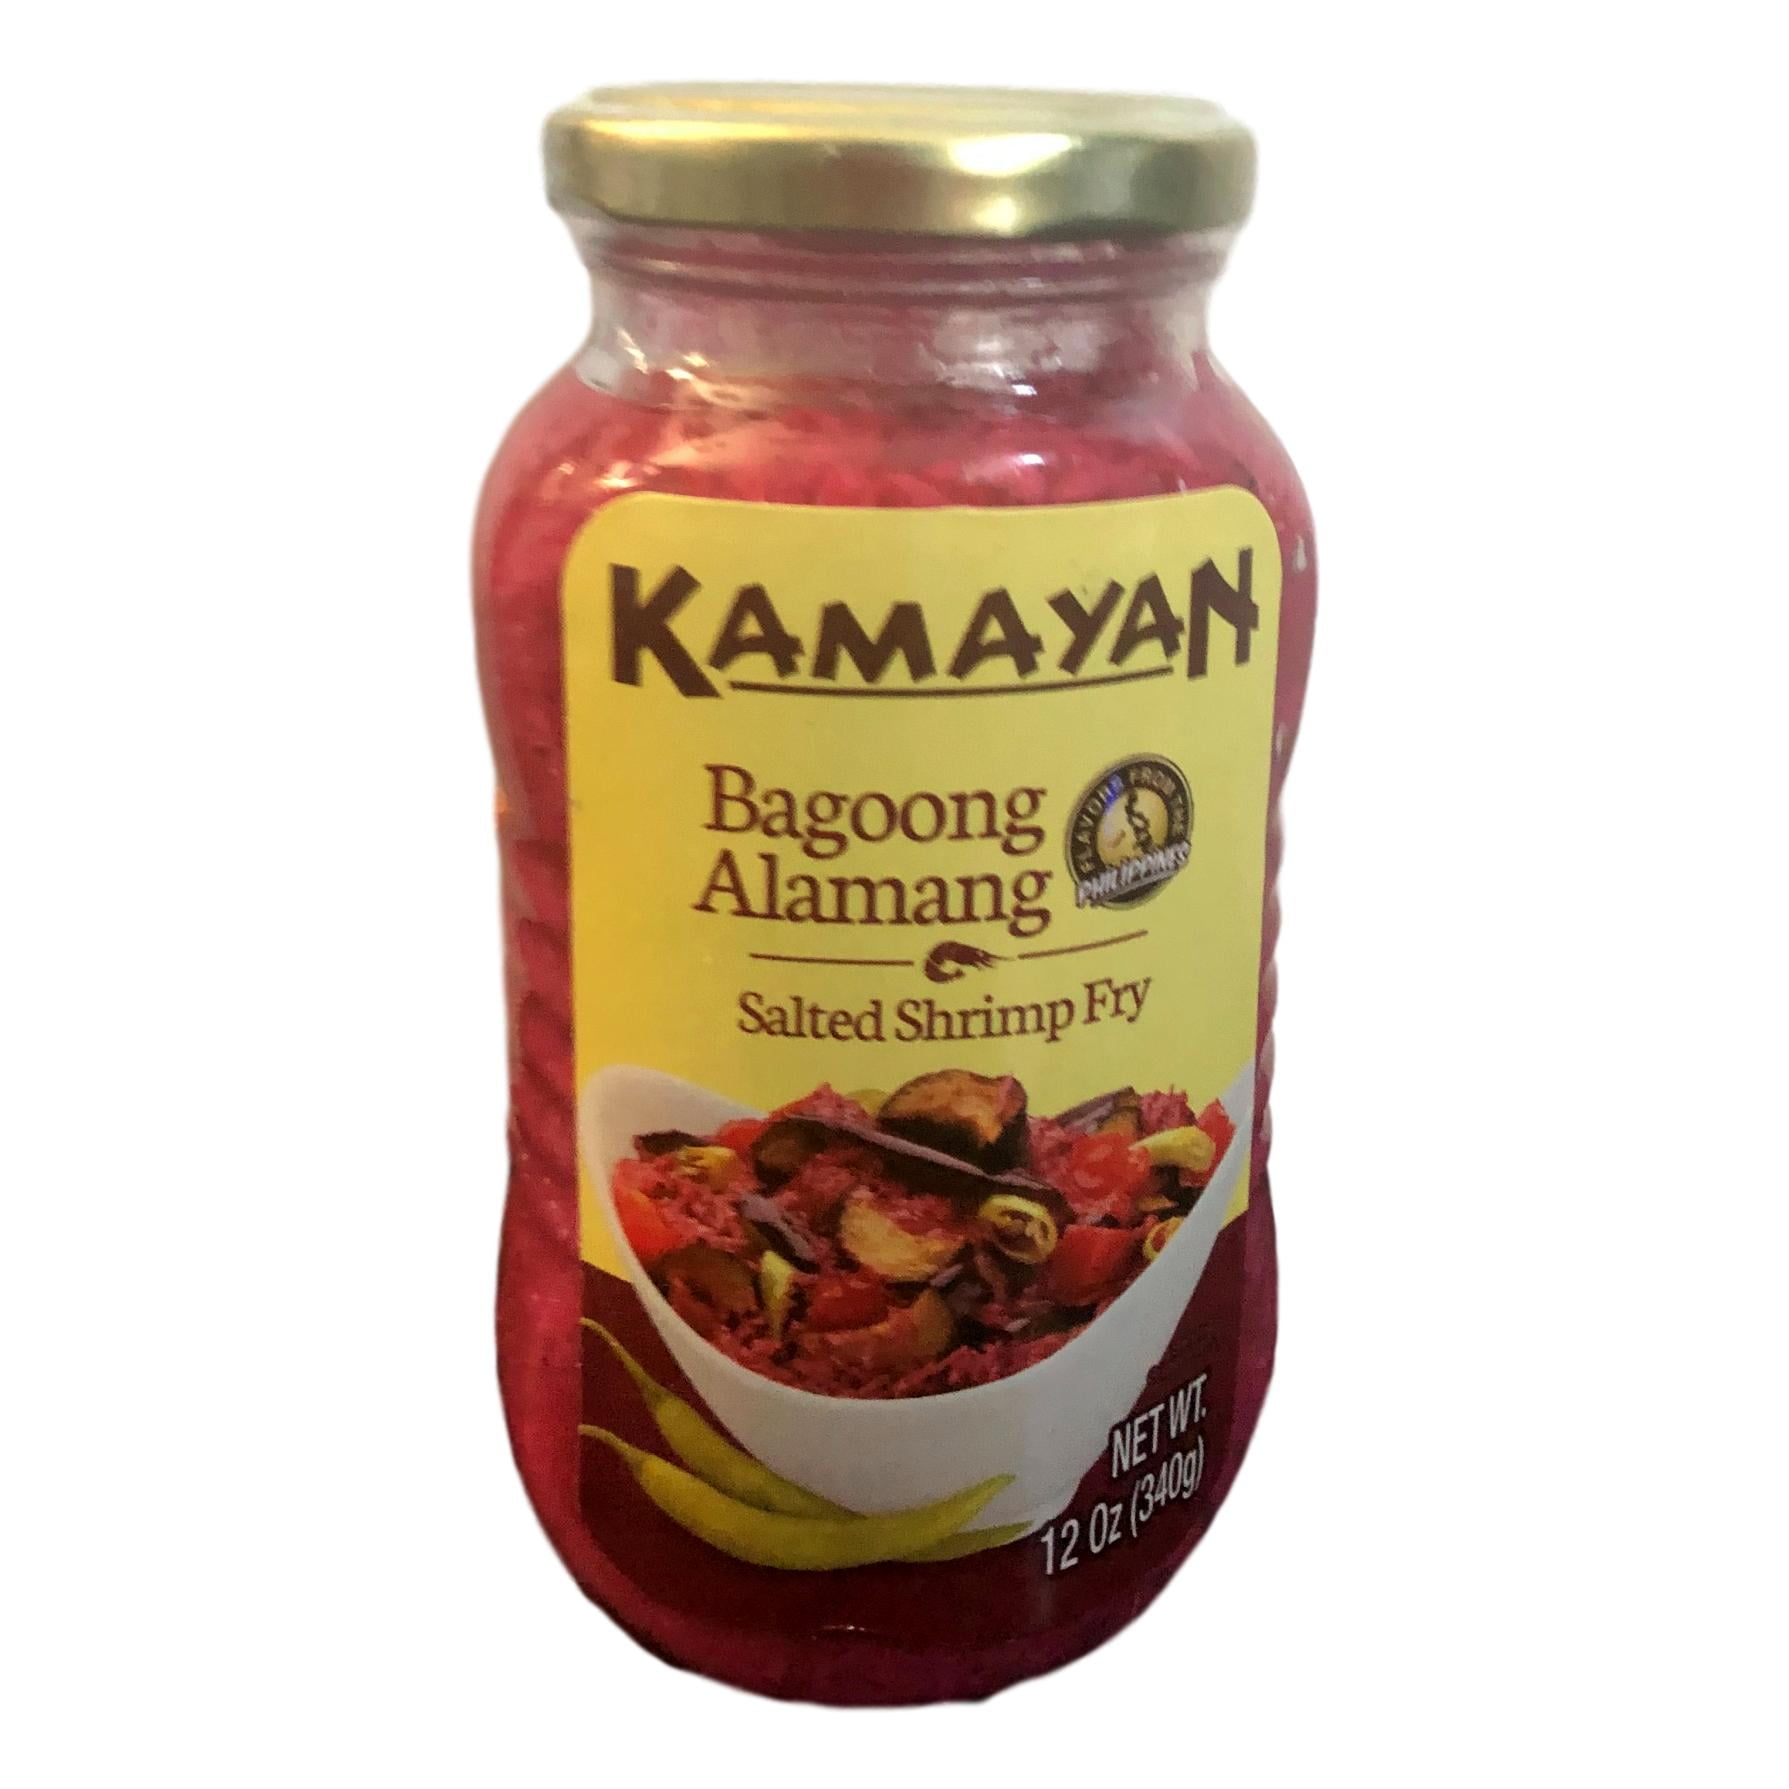 Kamayan- Bagoong Alamang (Salted Shrimp Fry) [12 oz / 340 g